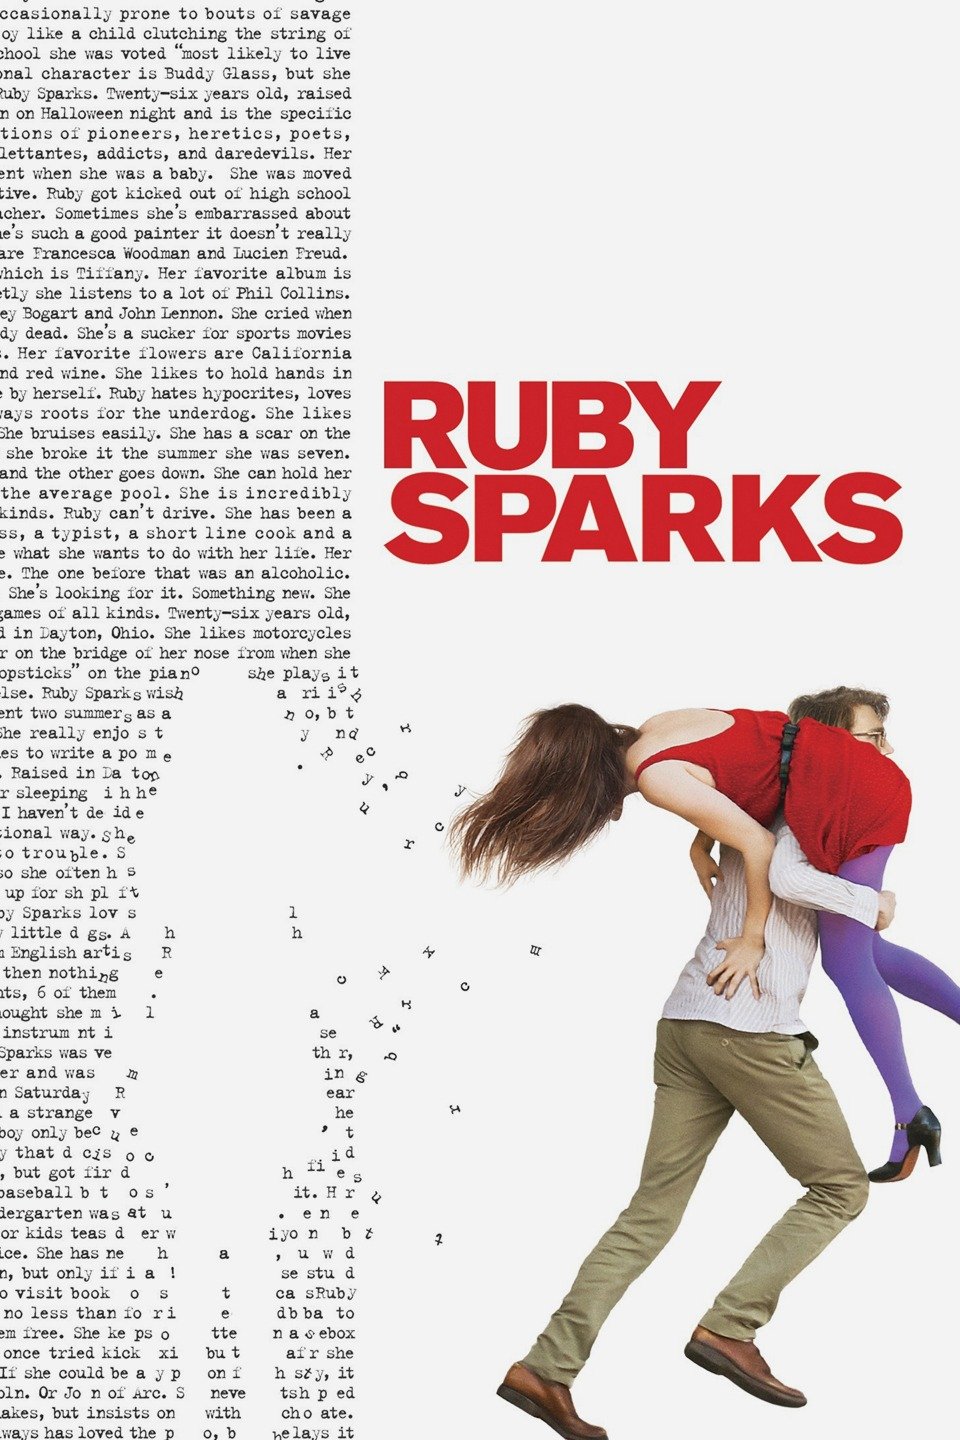 [MINI-HD] Ruby Sparks (2012) เขียนเธอให้เจอผม [1080p] [พากย์ไทย 5.1 + เสียงอังกฤษ DTS] [บรรยายไทย + อังกฤษ] [เสียงไทย + ซับไทย] [OPENLOAD]